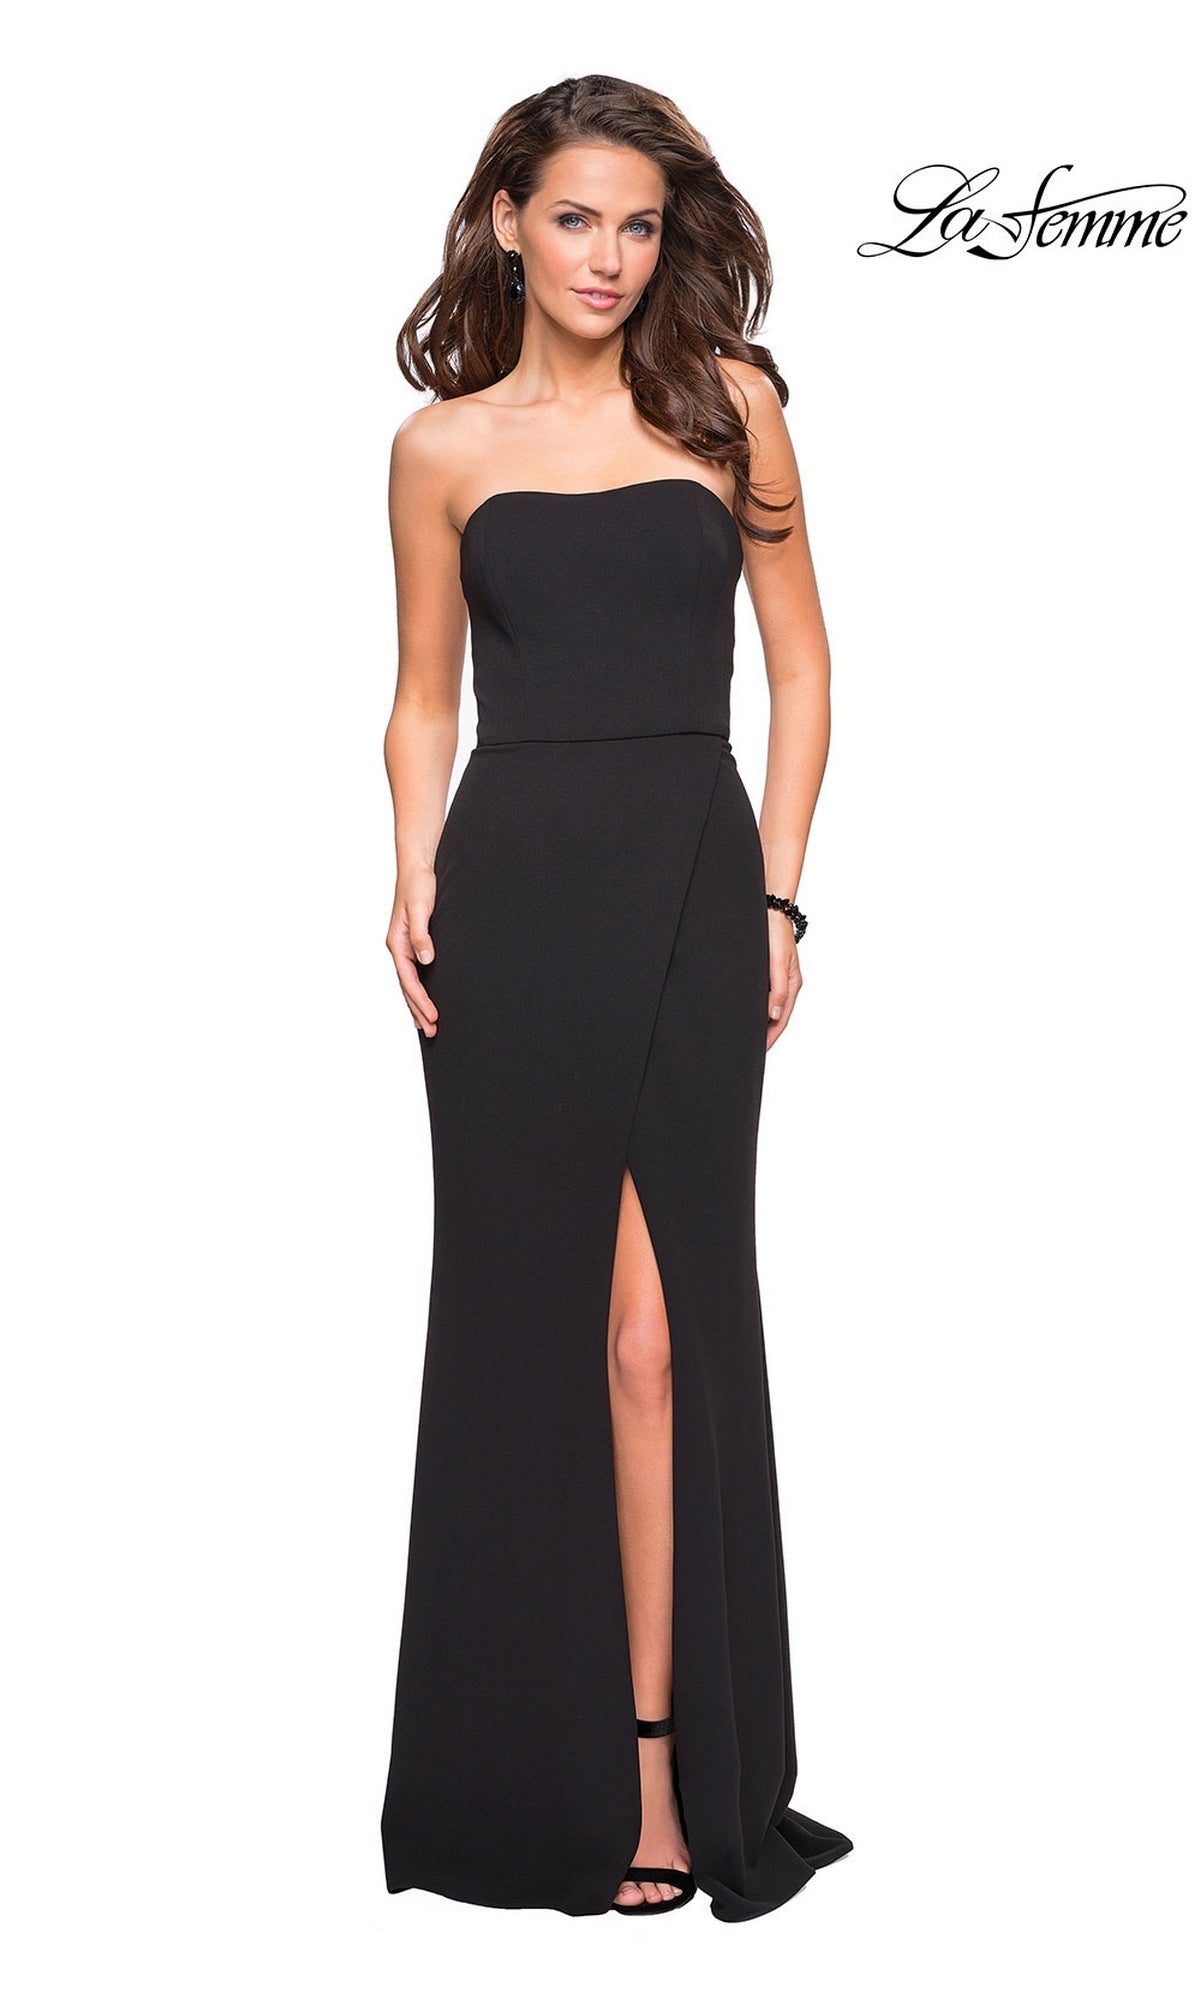 Black La Femme 27035 Formal Prom Dress